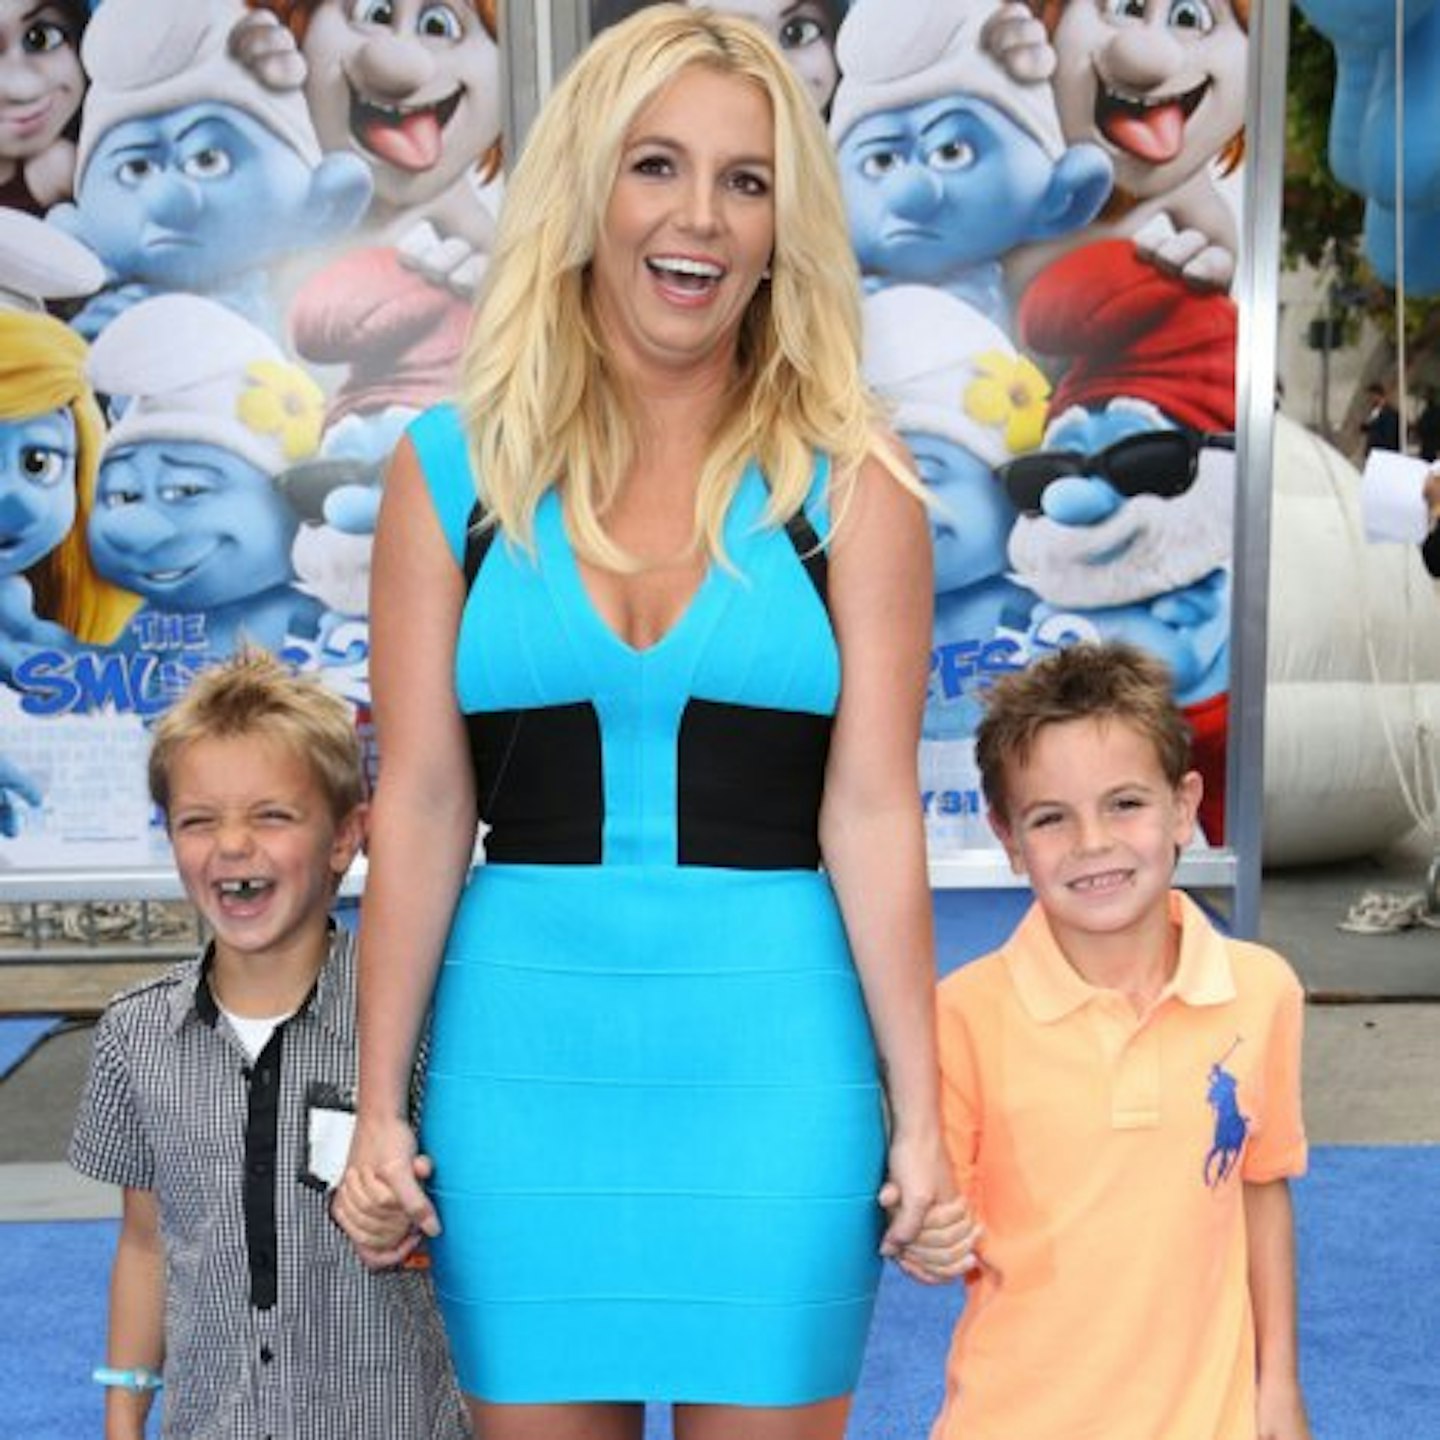 Britney lost custody of sons Sean and Jayden James in 2007